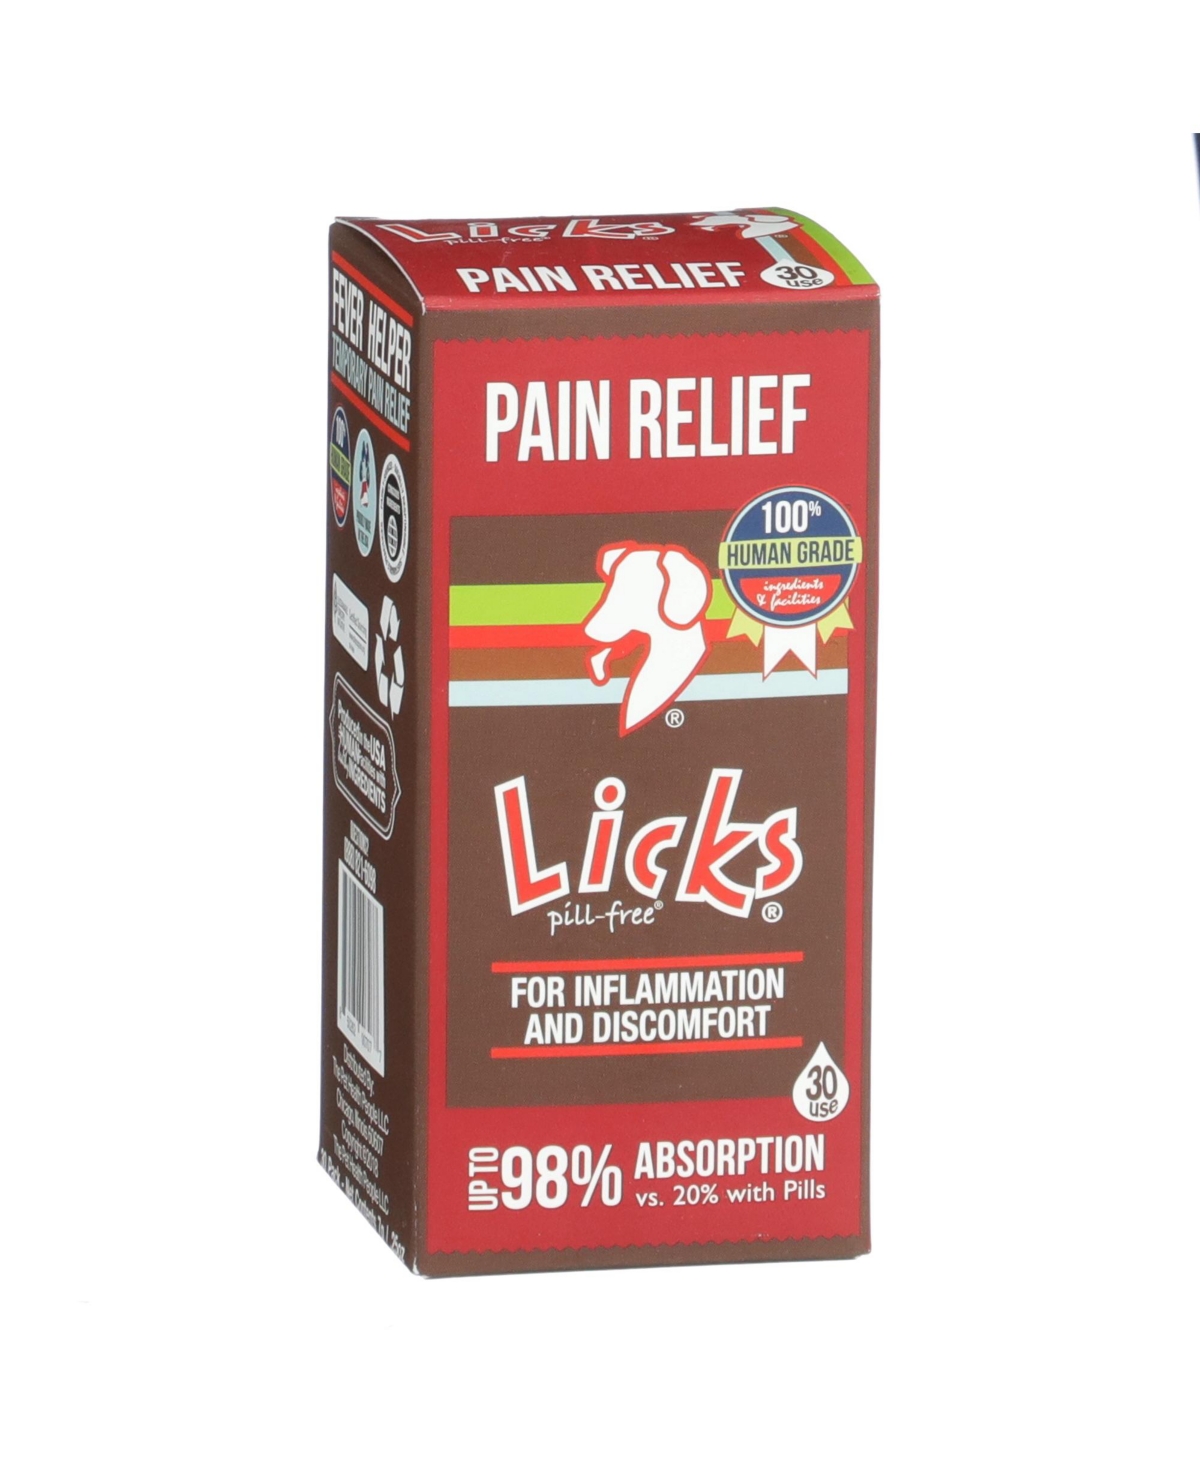 Licks Pill-Free Dog Pain Relief - Inflammation Supplement - Pain Relief Supplement for Dogs - Dog Health Supplies - Gel Packets - 30 U